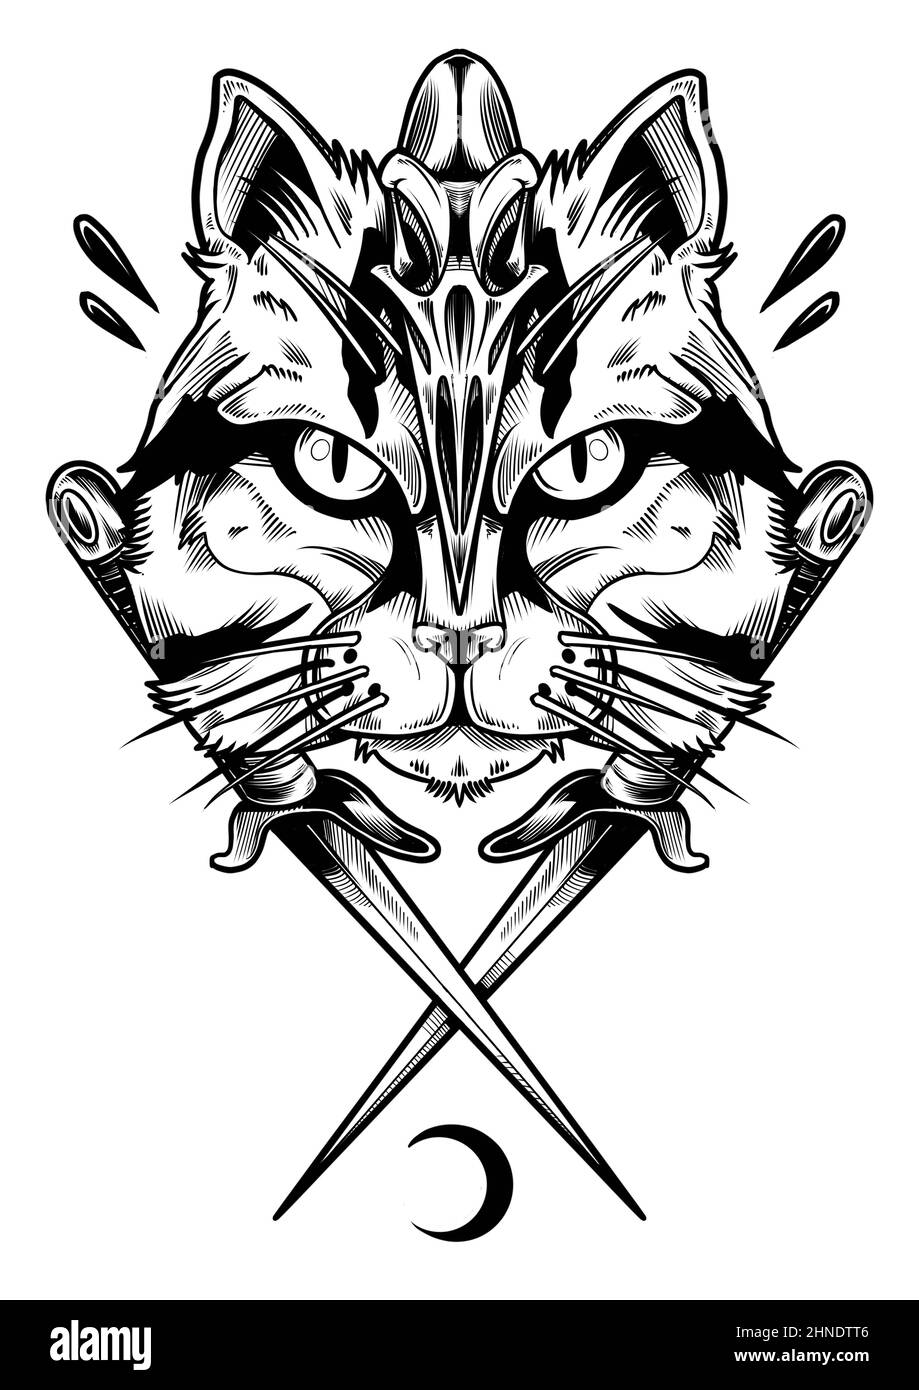 Cat Sais modern bold contemporary tattoo art graphic illustrated design. Ink hand drawn ninja cat. Stock Photo